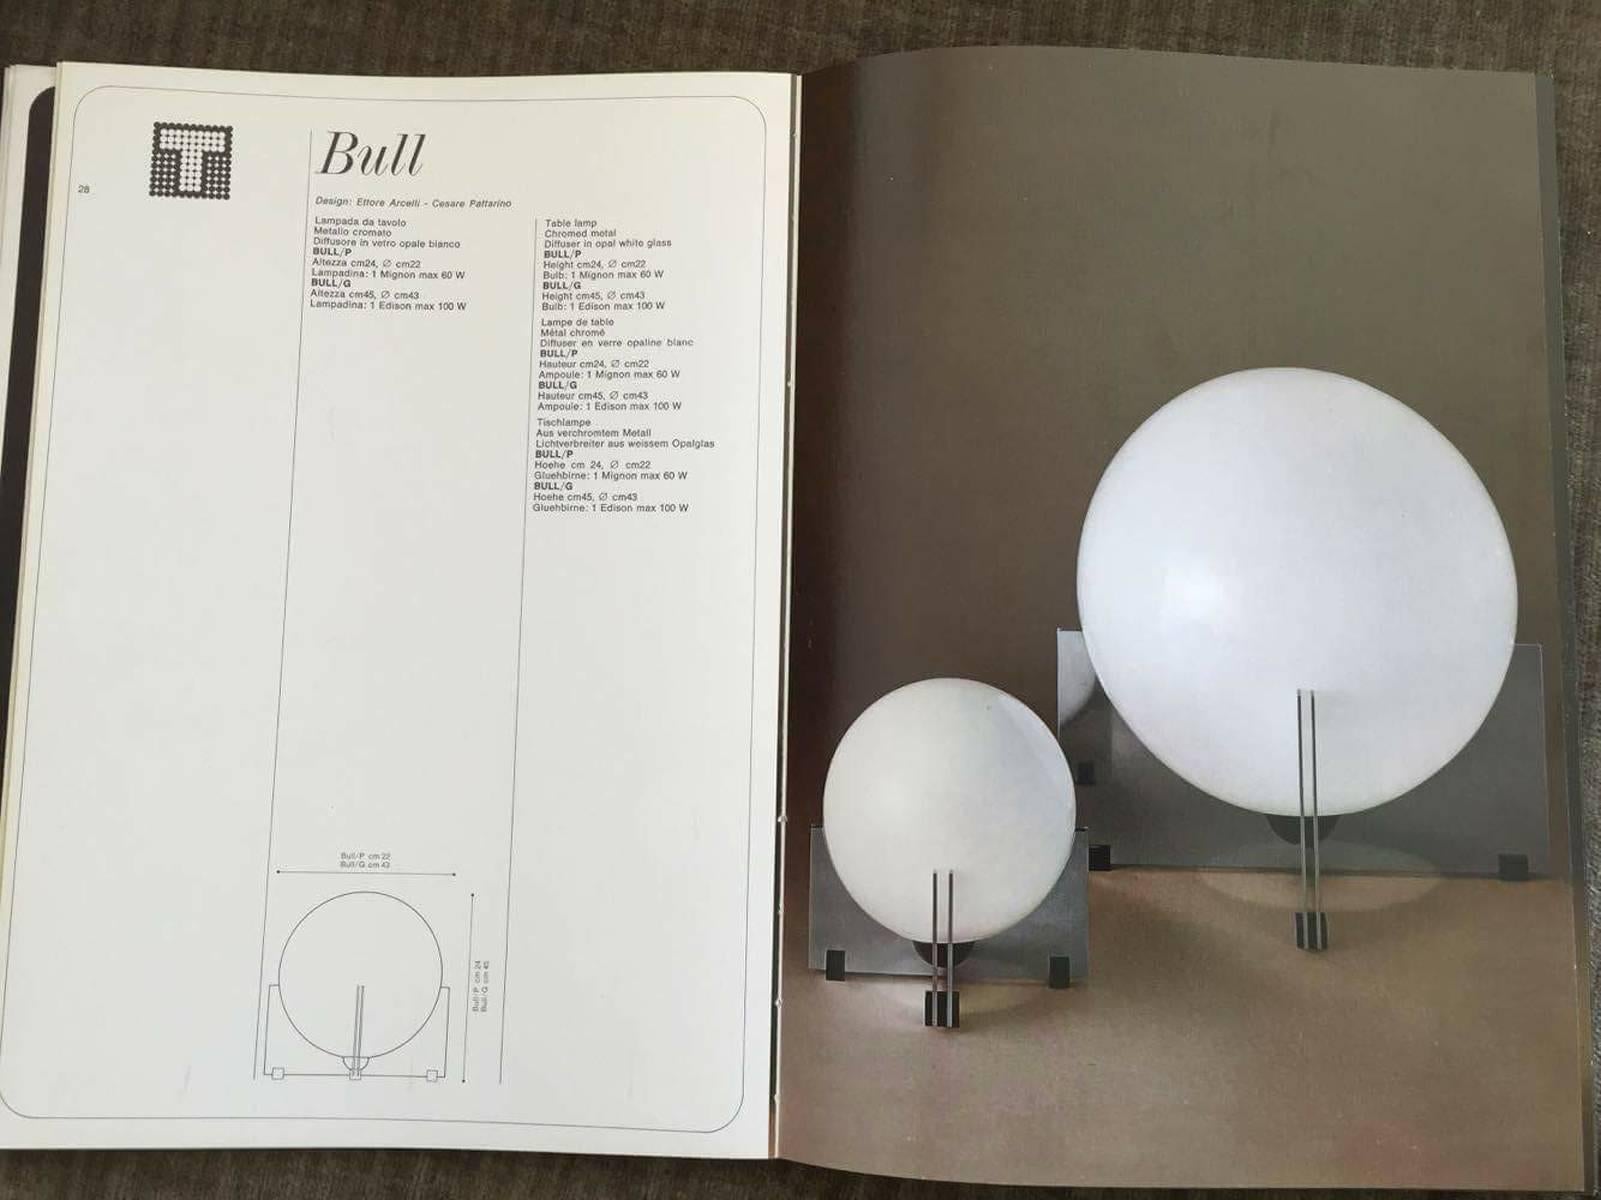 Aluminum Ettore Arcelli and Cesare Pattarino Bull Lamp for Tronconi, Italy, 1975